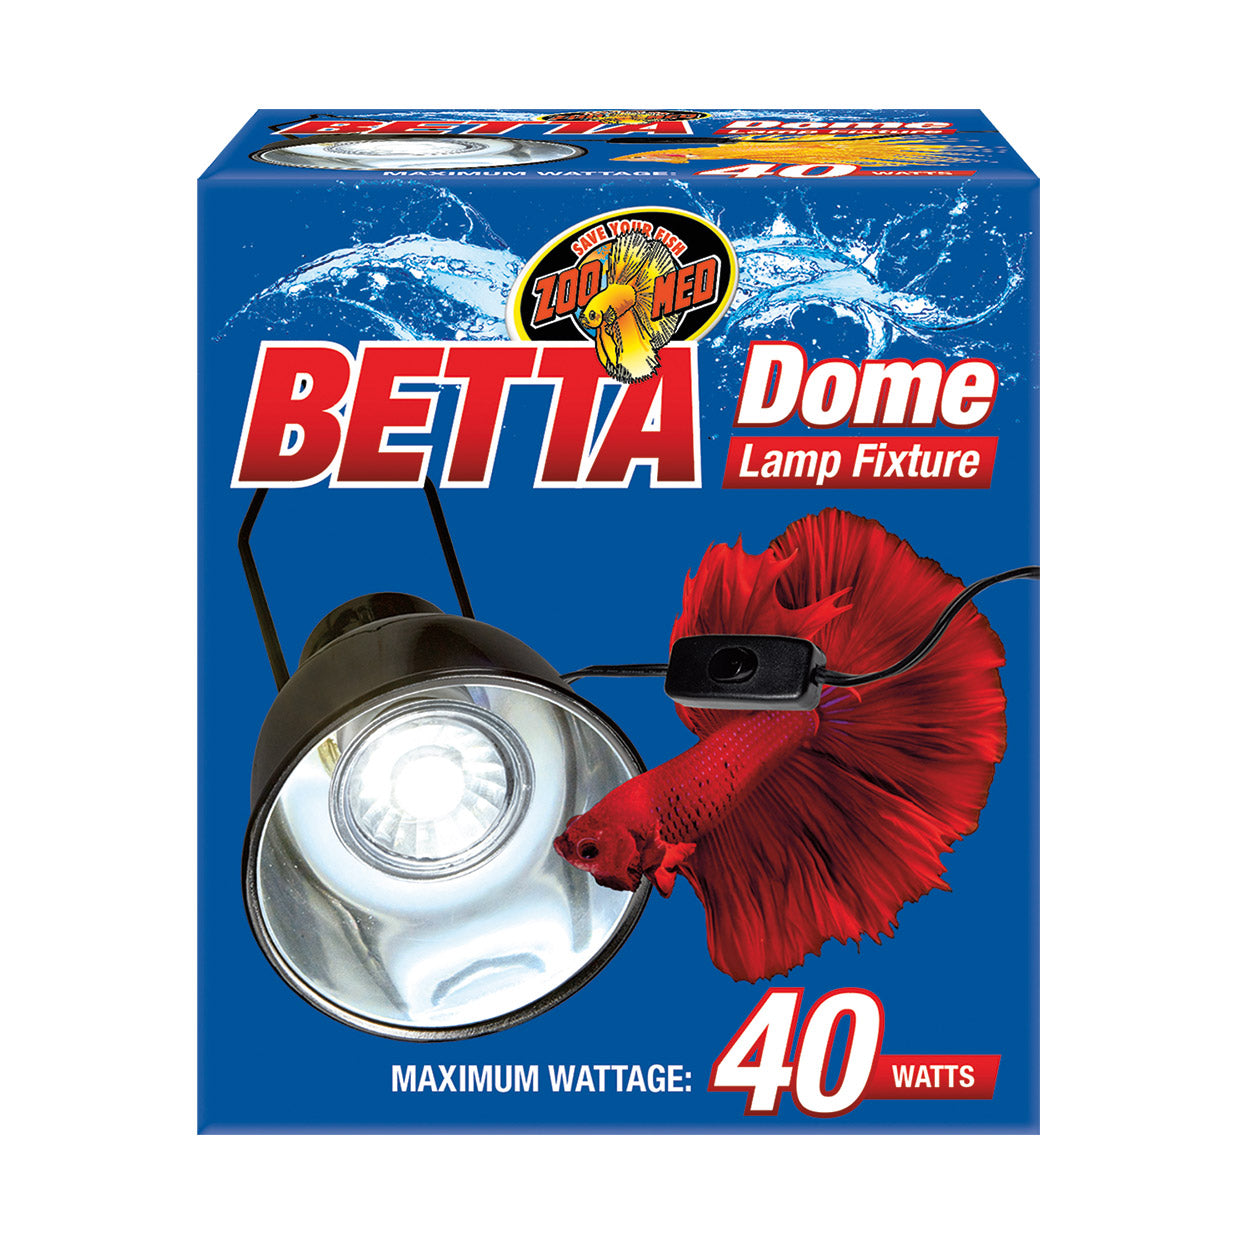 Zoo Med Betta Light Dome